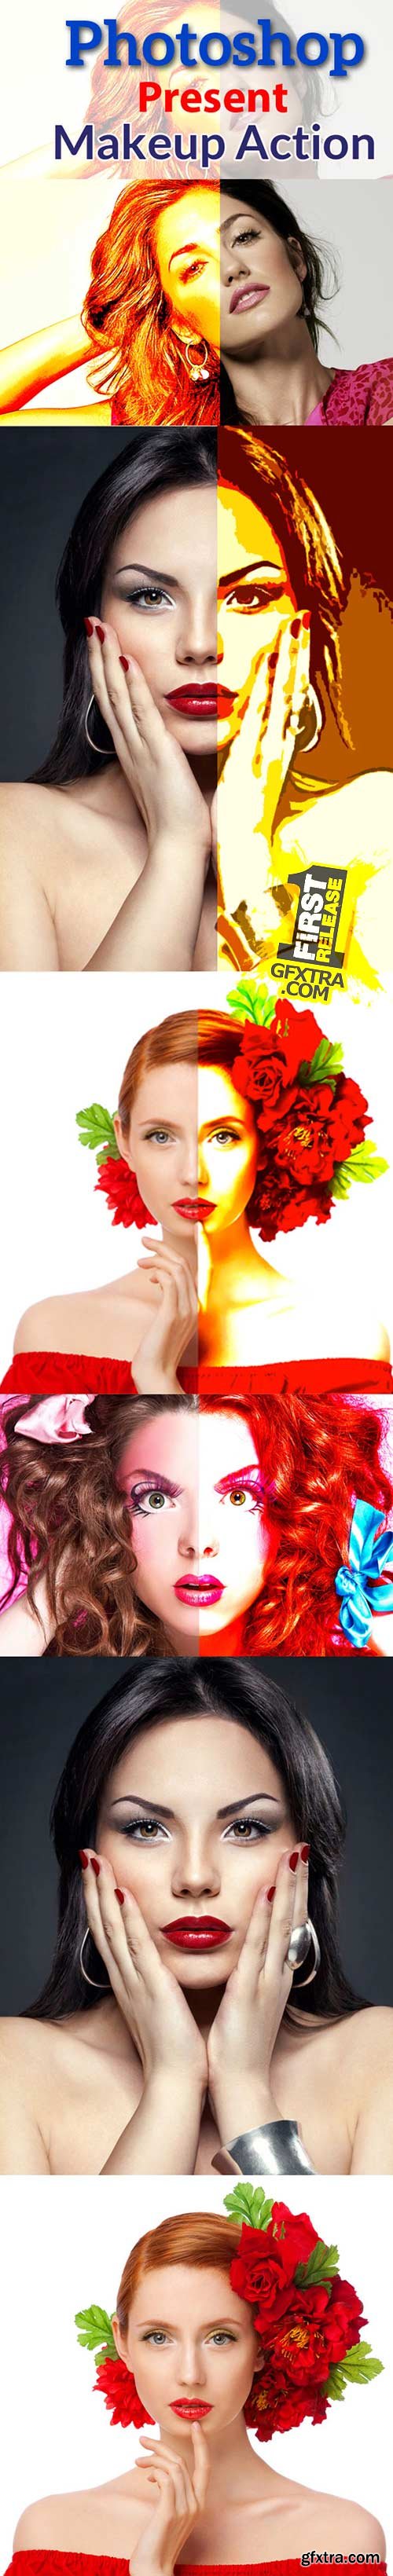 CodeGrape - Photoshop Present Makeup Action 5372